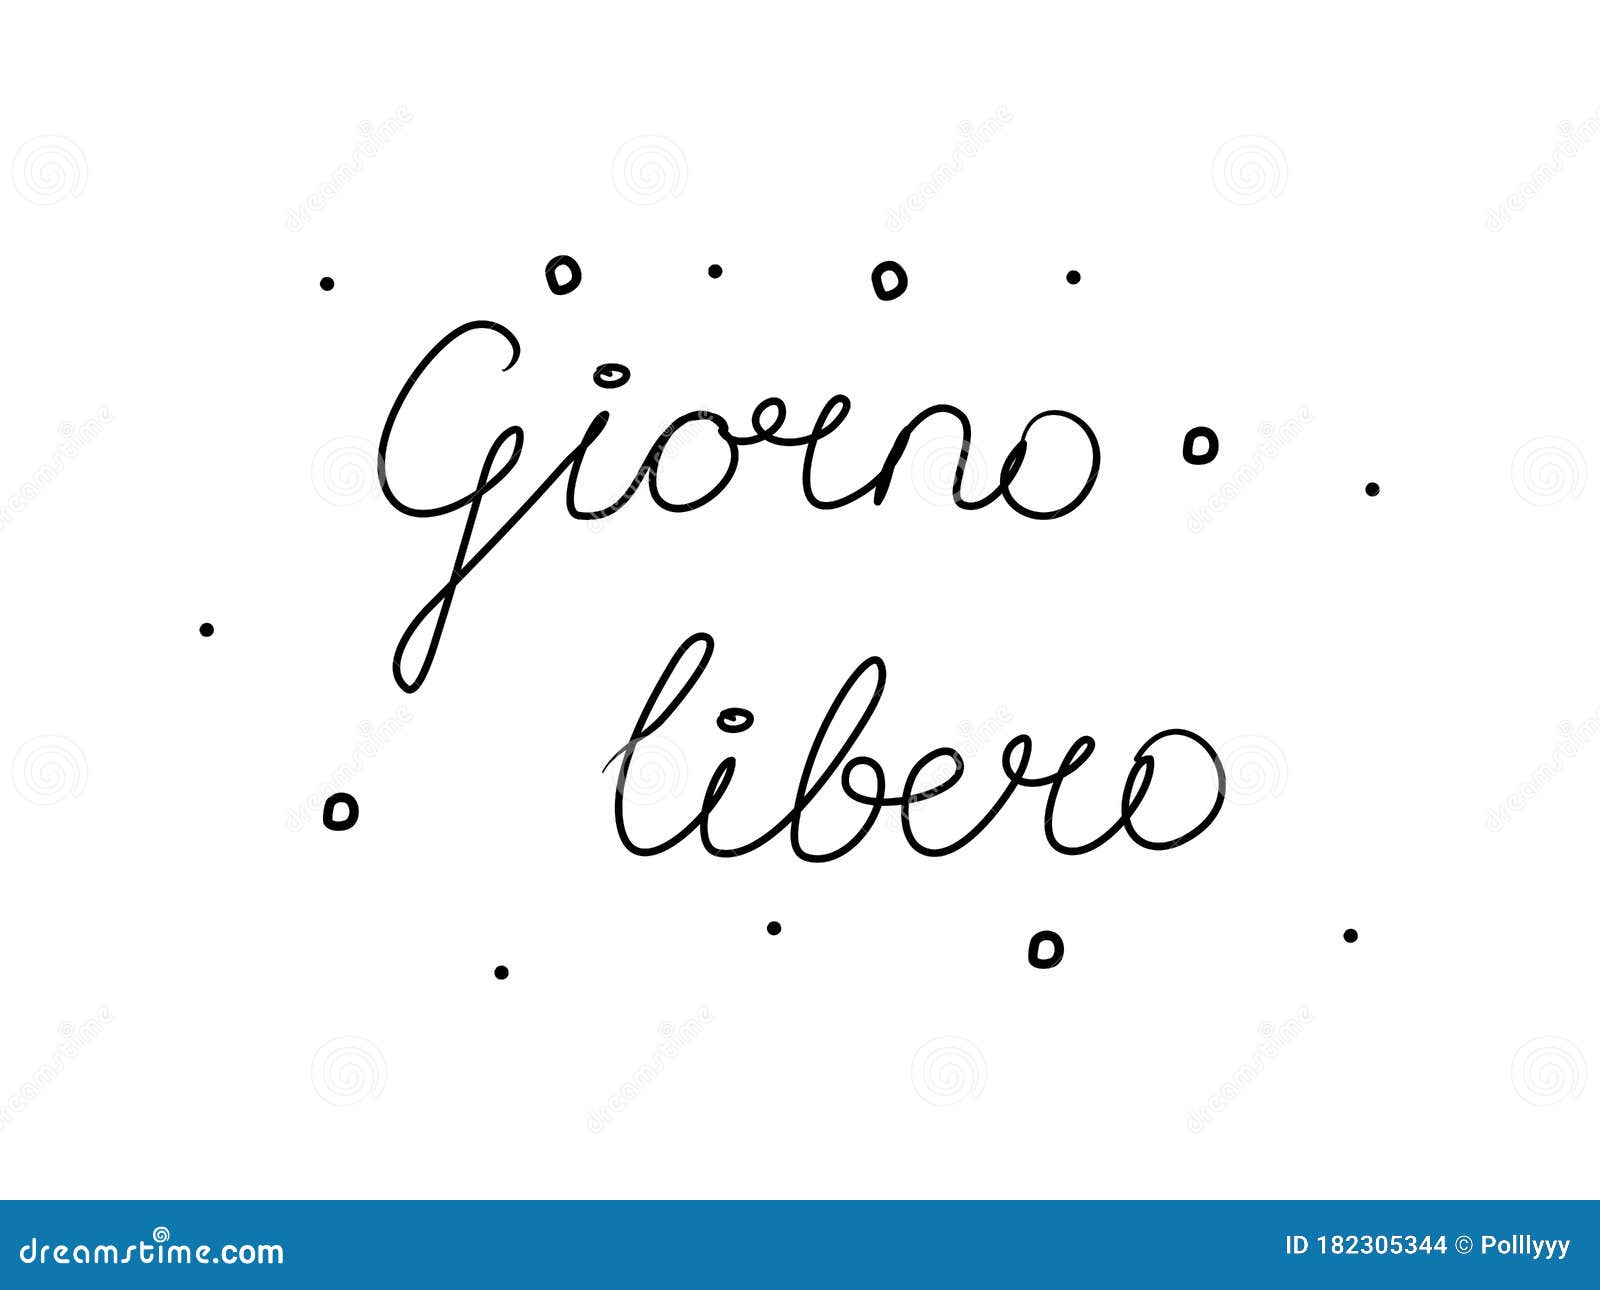 giorno libero phrase handwritten with a calligraphy brush. day off in italian. modern brush calligraphy.  word black